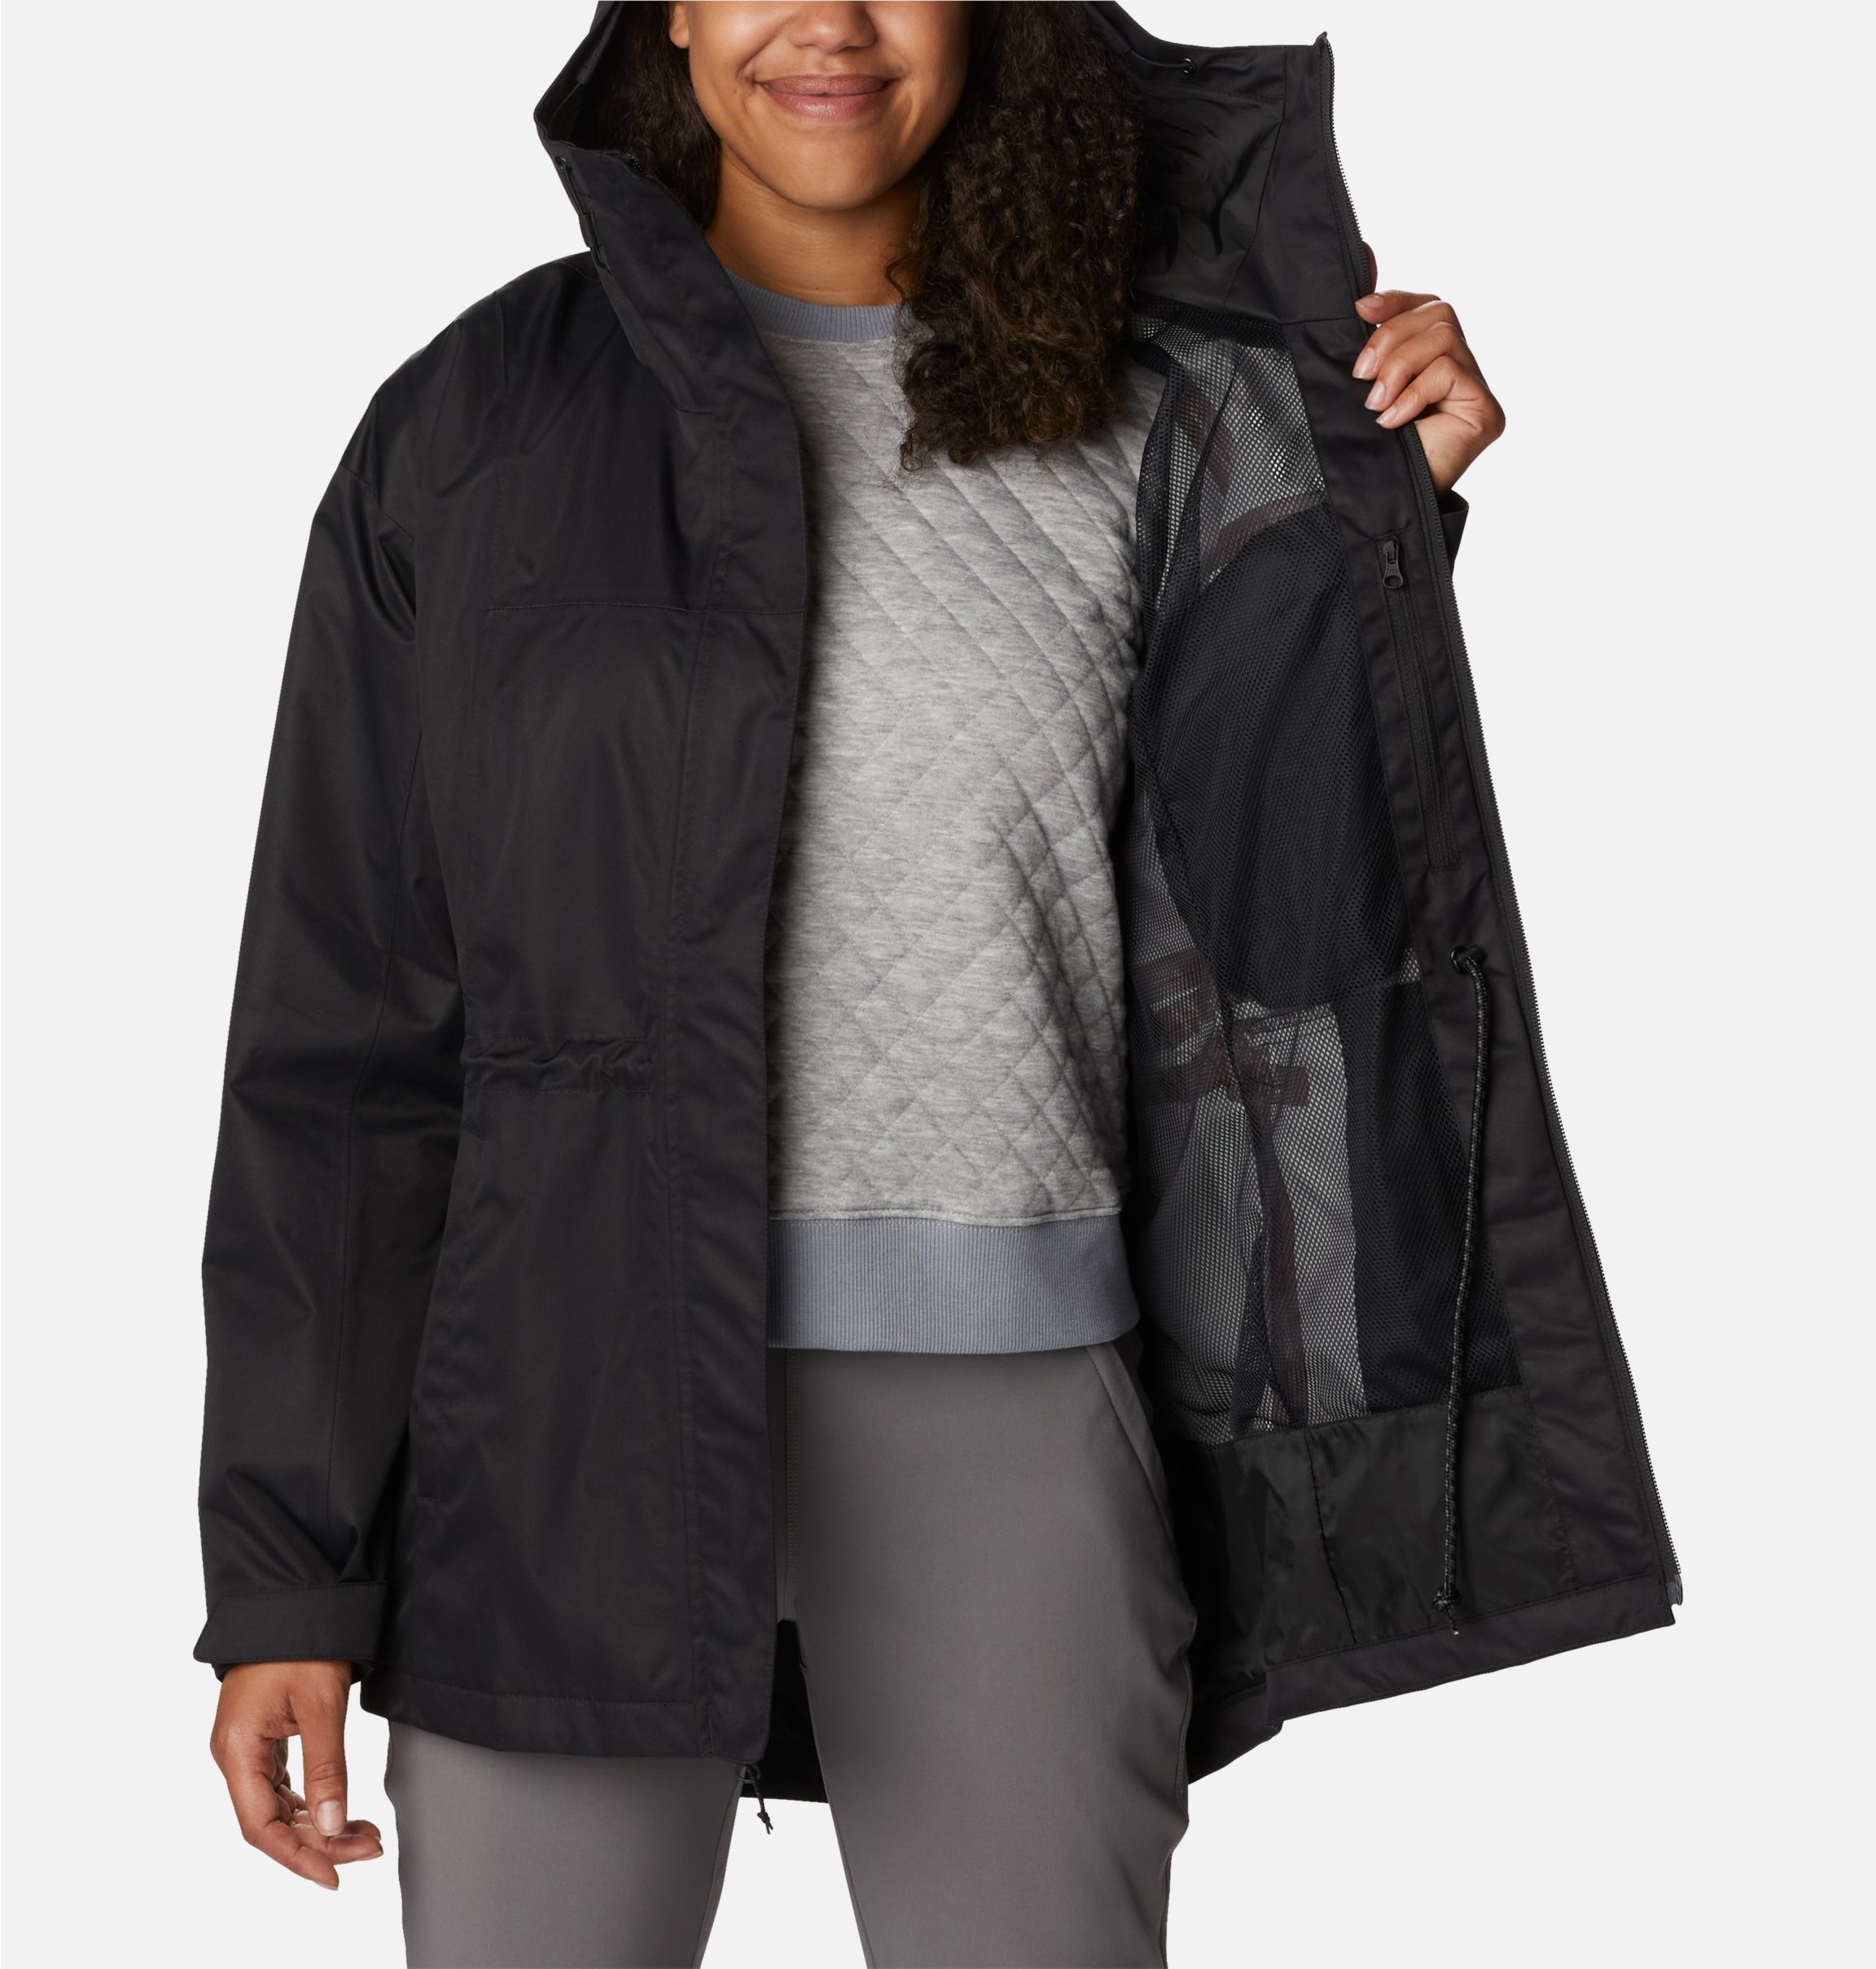 Women's Hikebound™ Long Rain Jacket | Columbia Sportswear